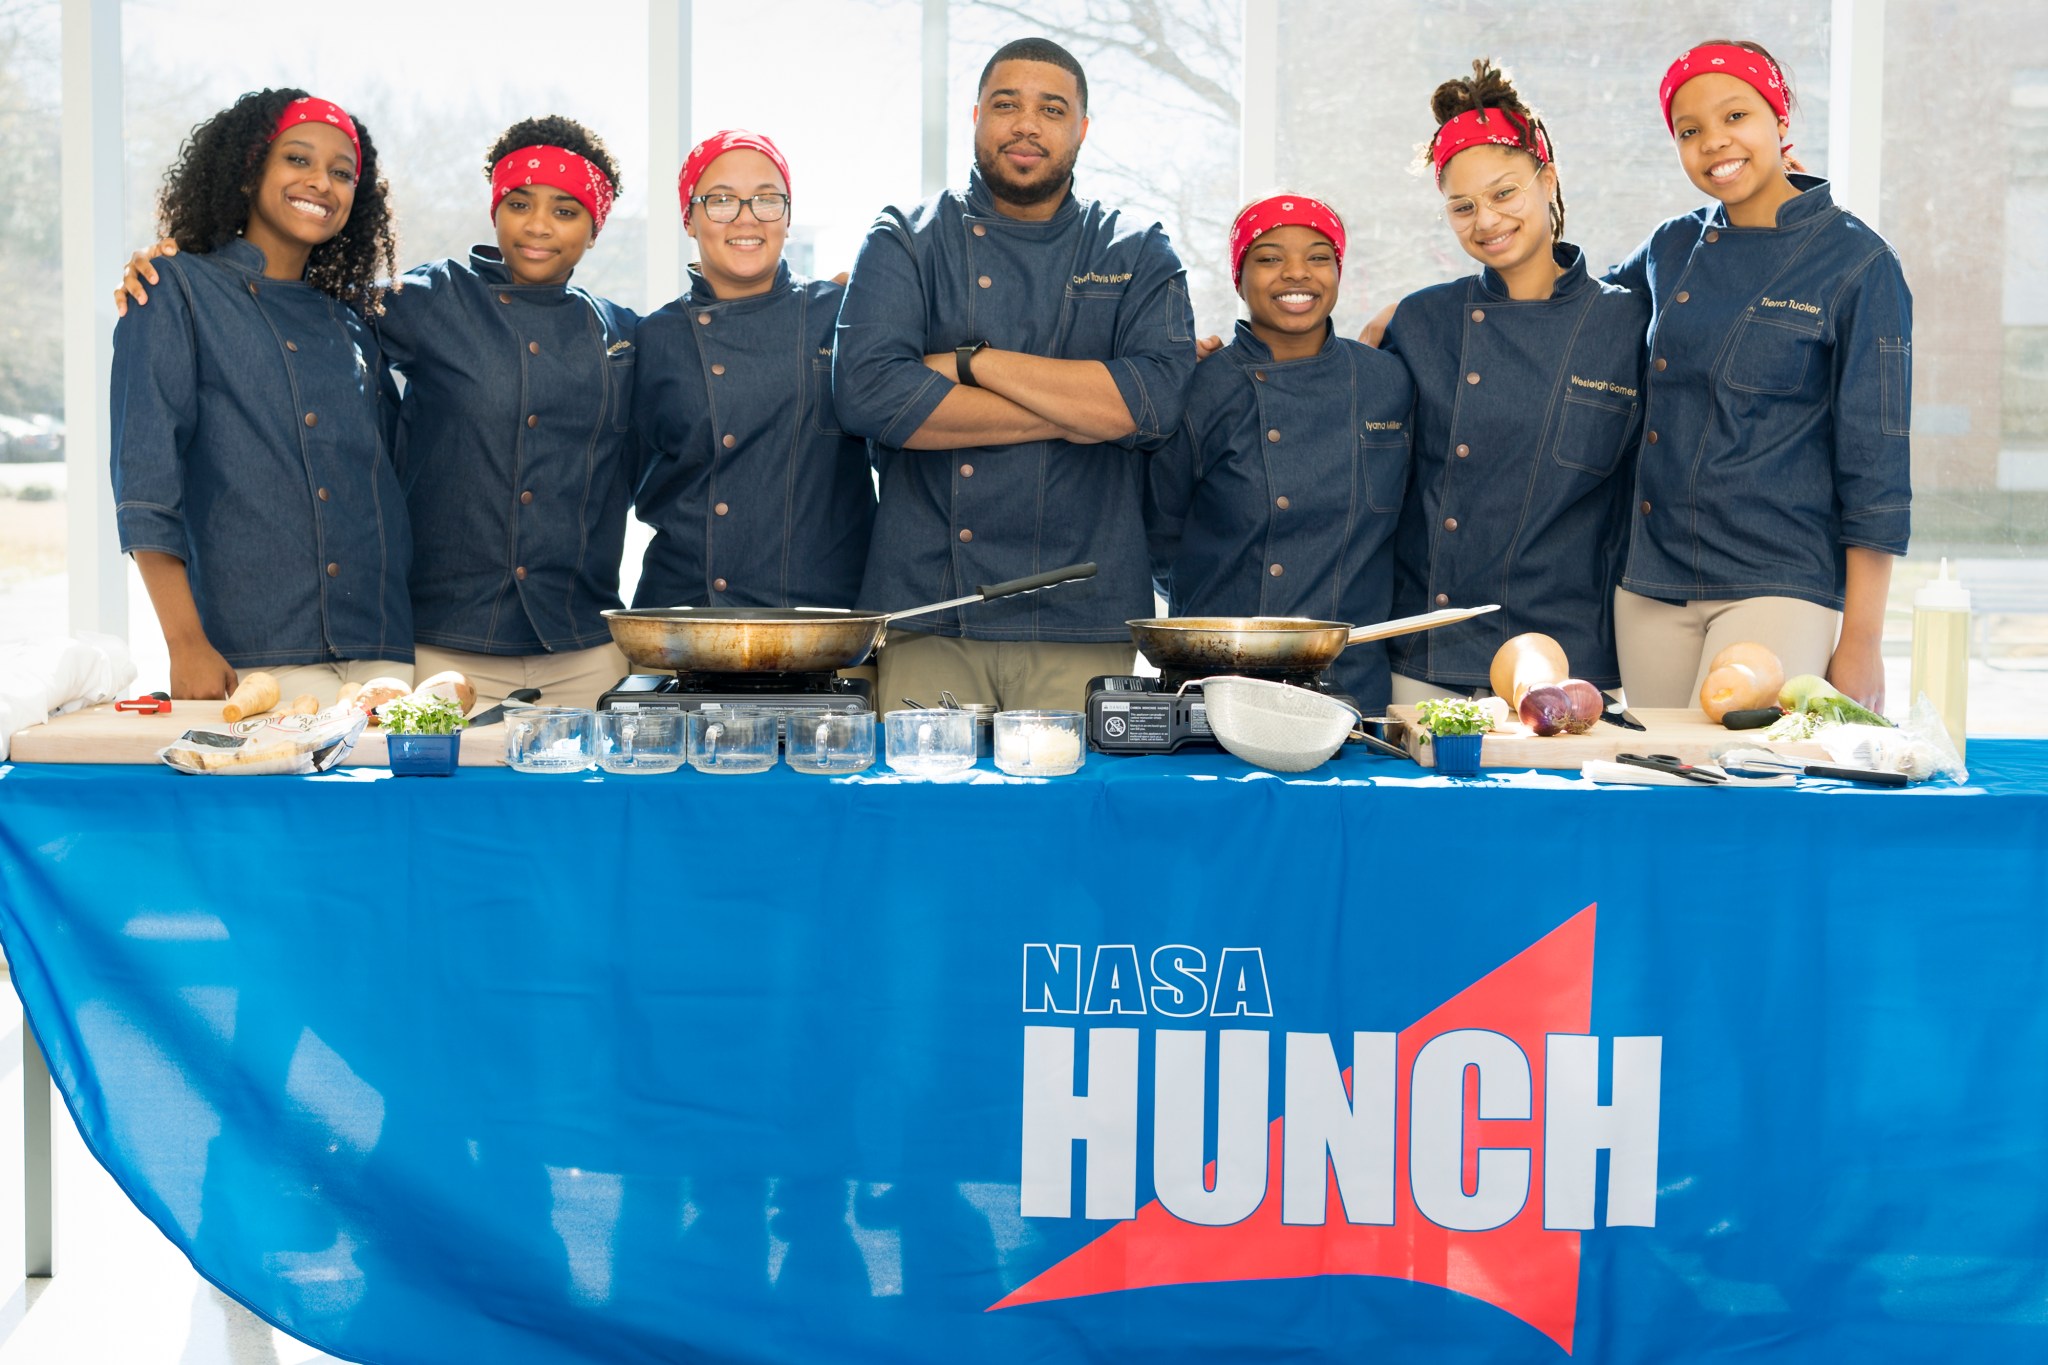 Phoebus High School of Hampton, Virginia, has won the 2019 NASA HUNCH Culinary Challenge with their organic harvest hash.